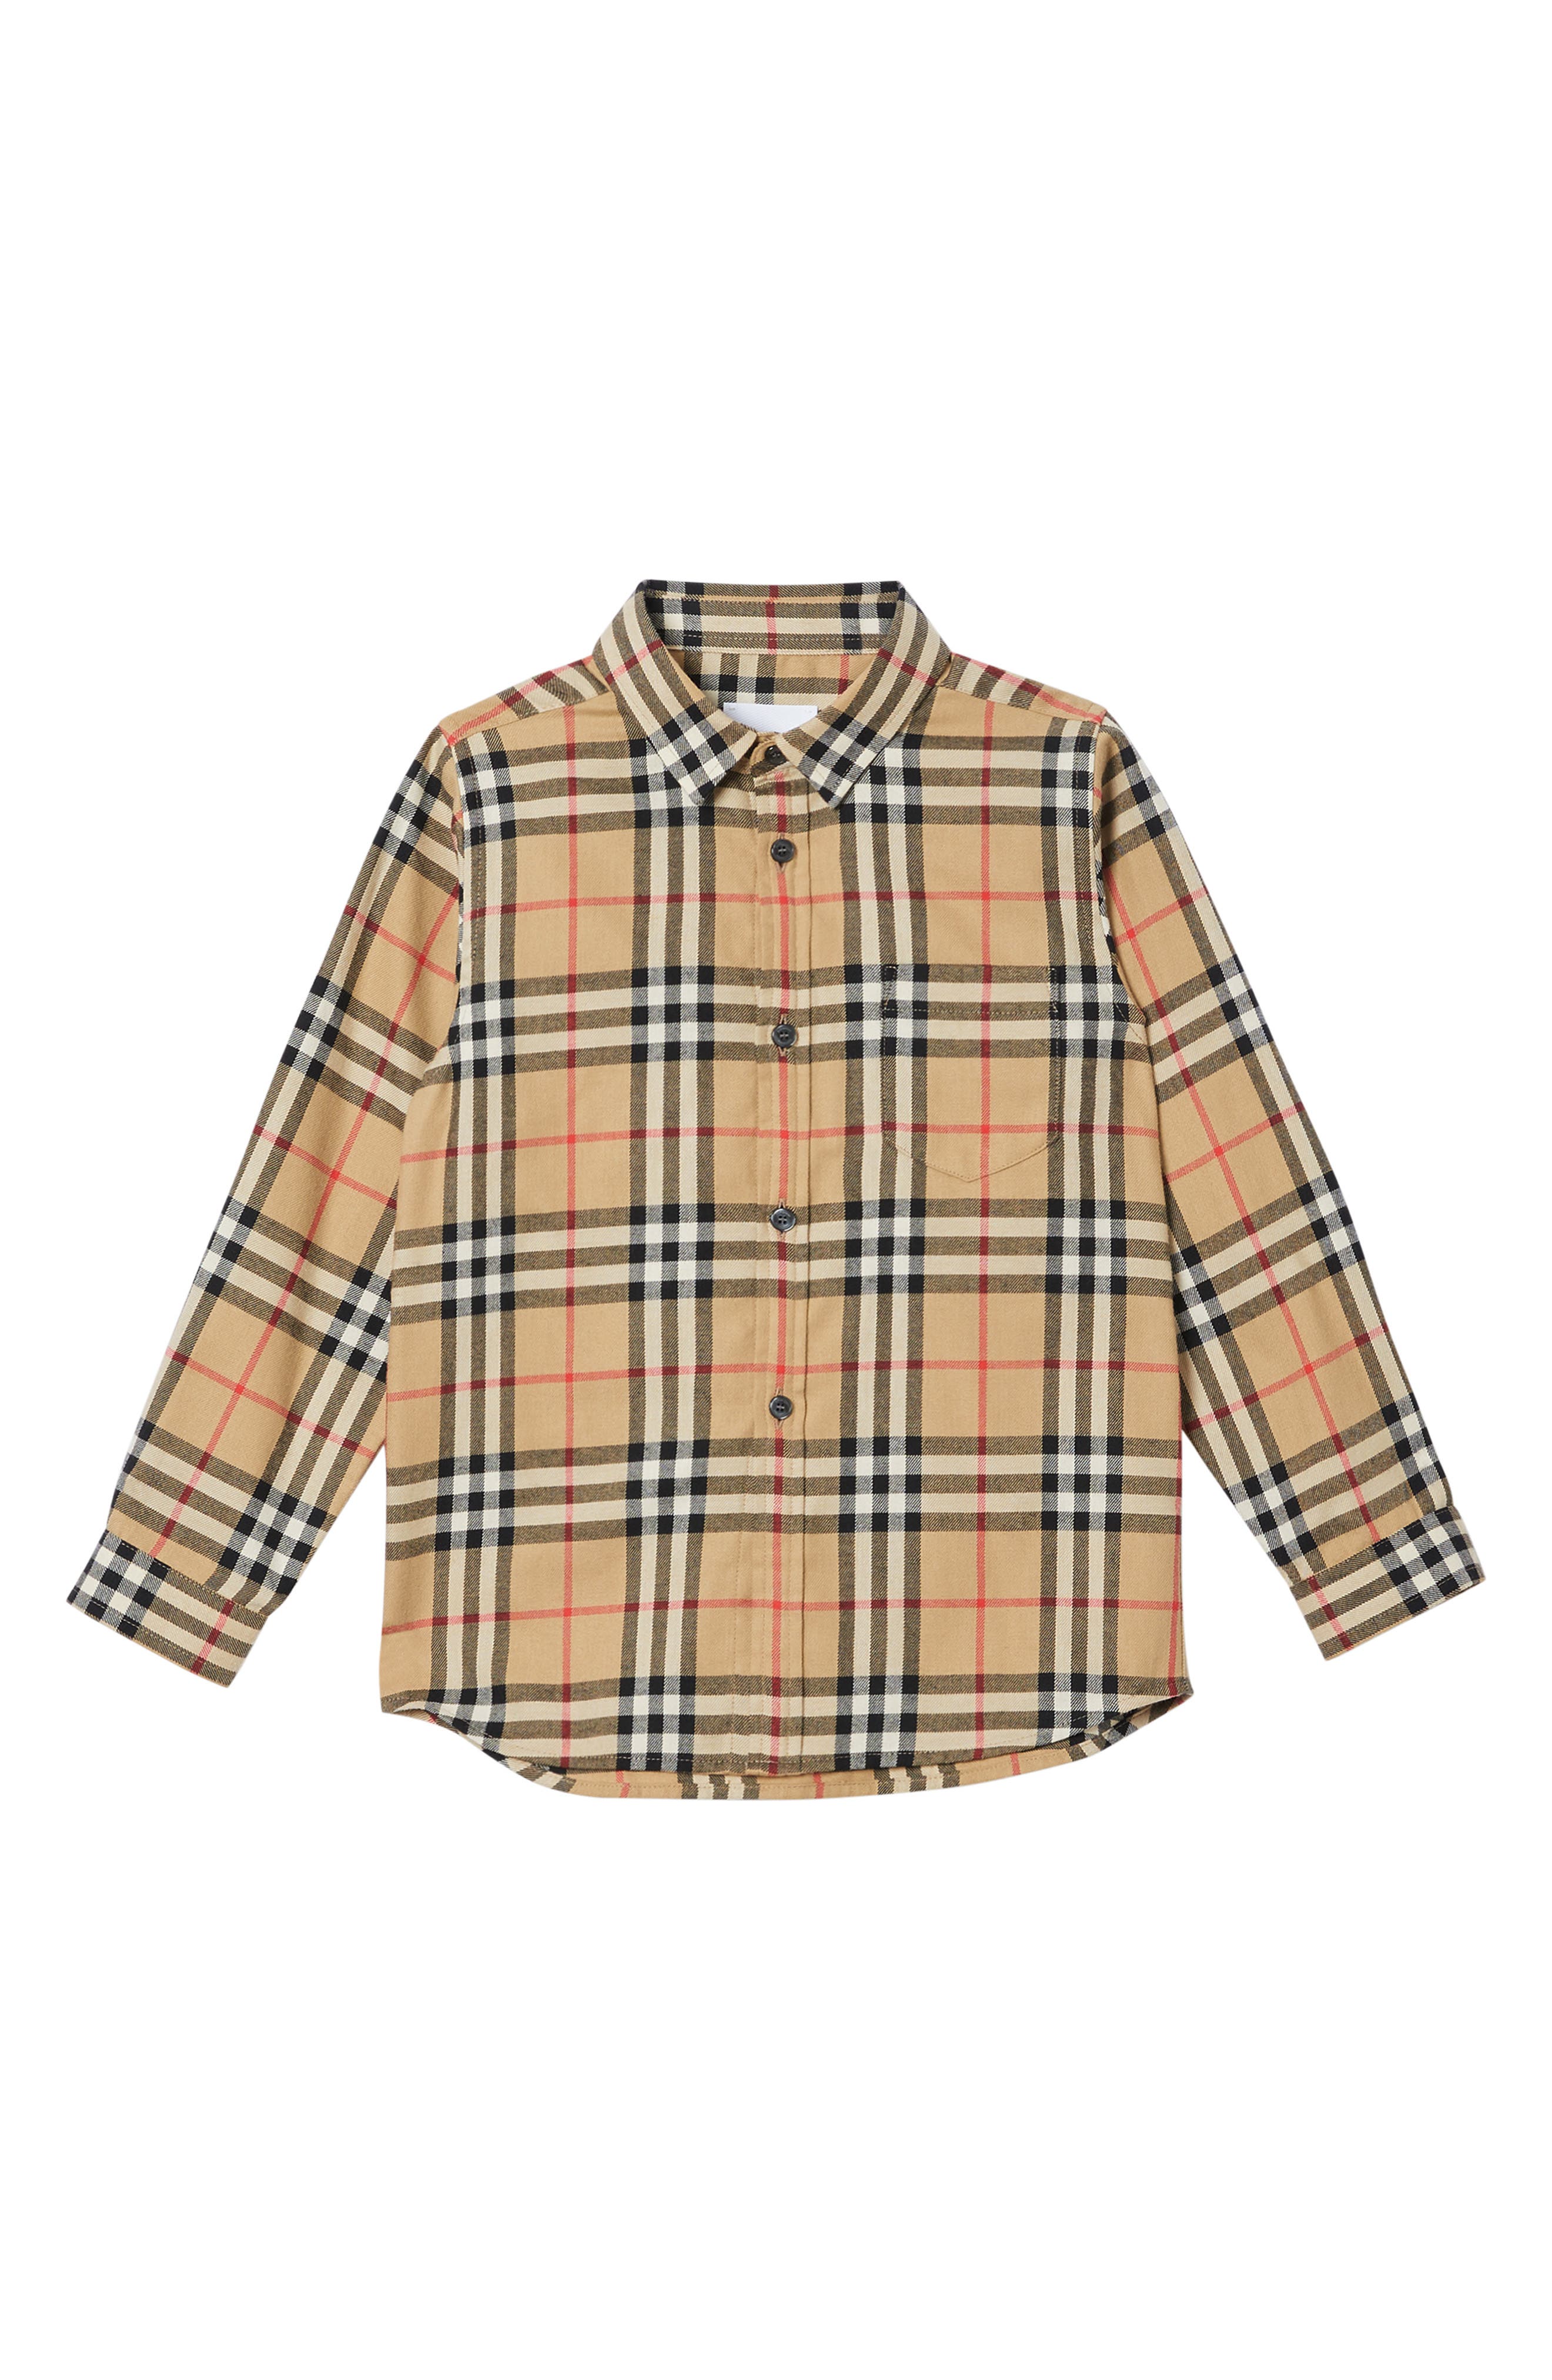 Burberry Fredrick Check Flannel Shirt 